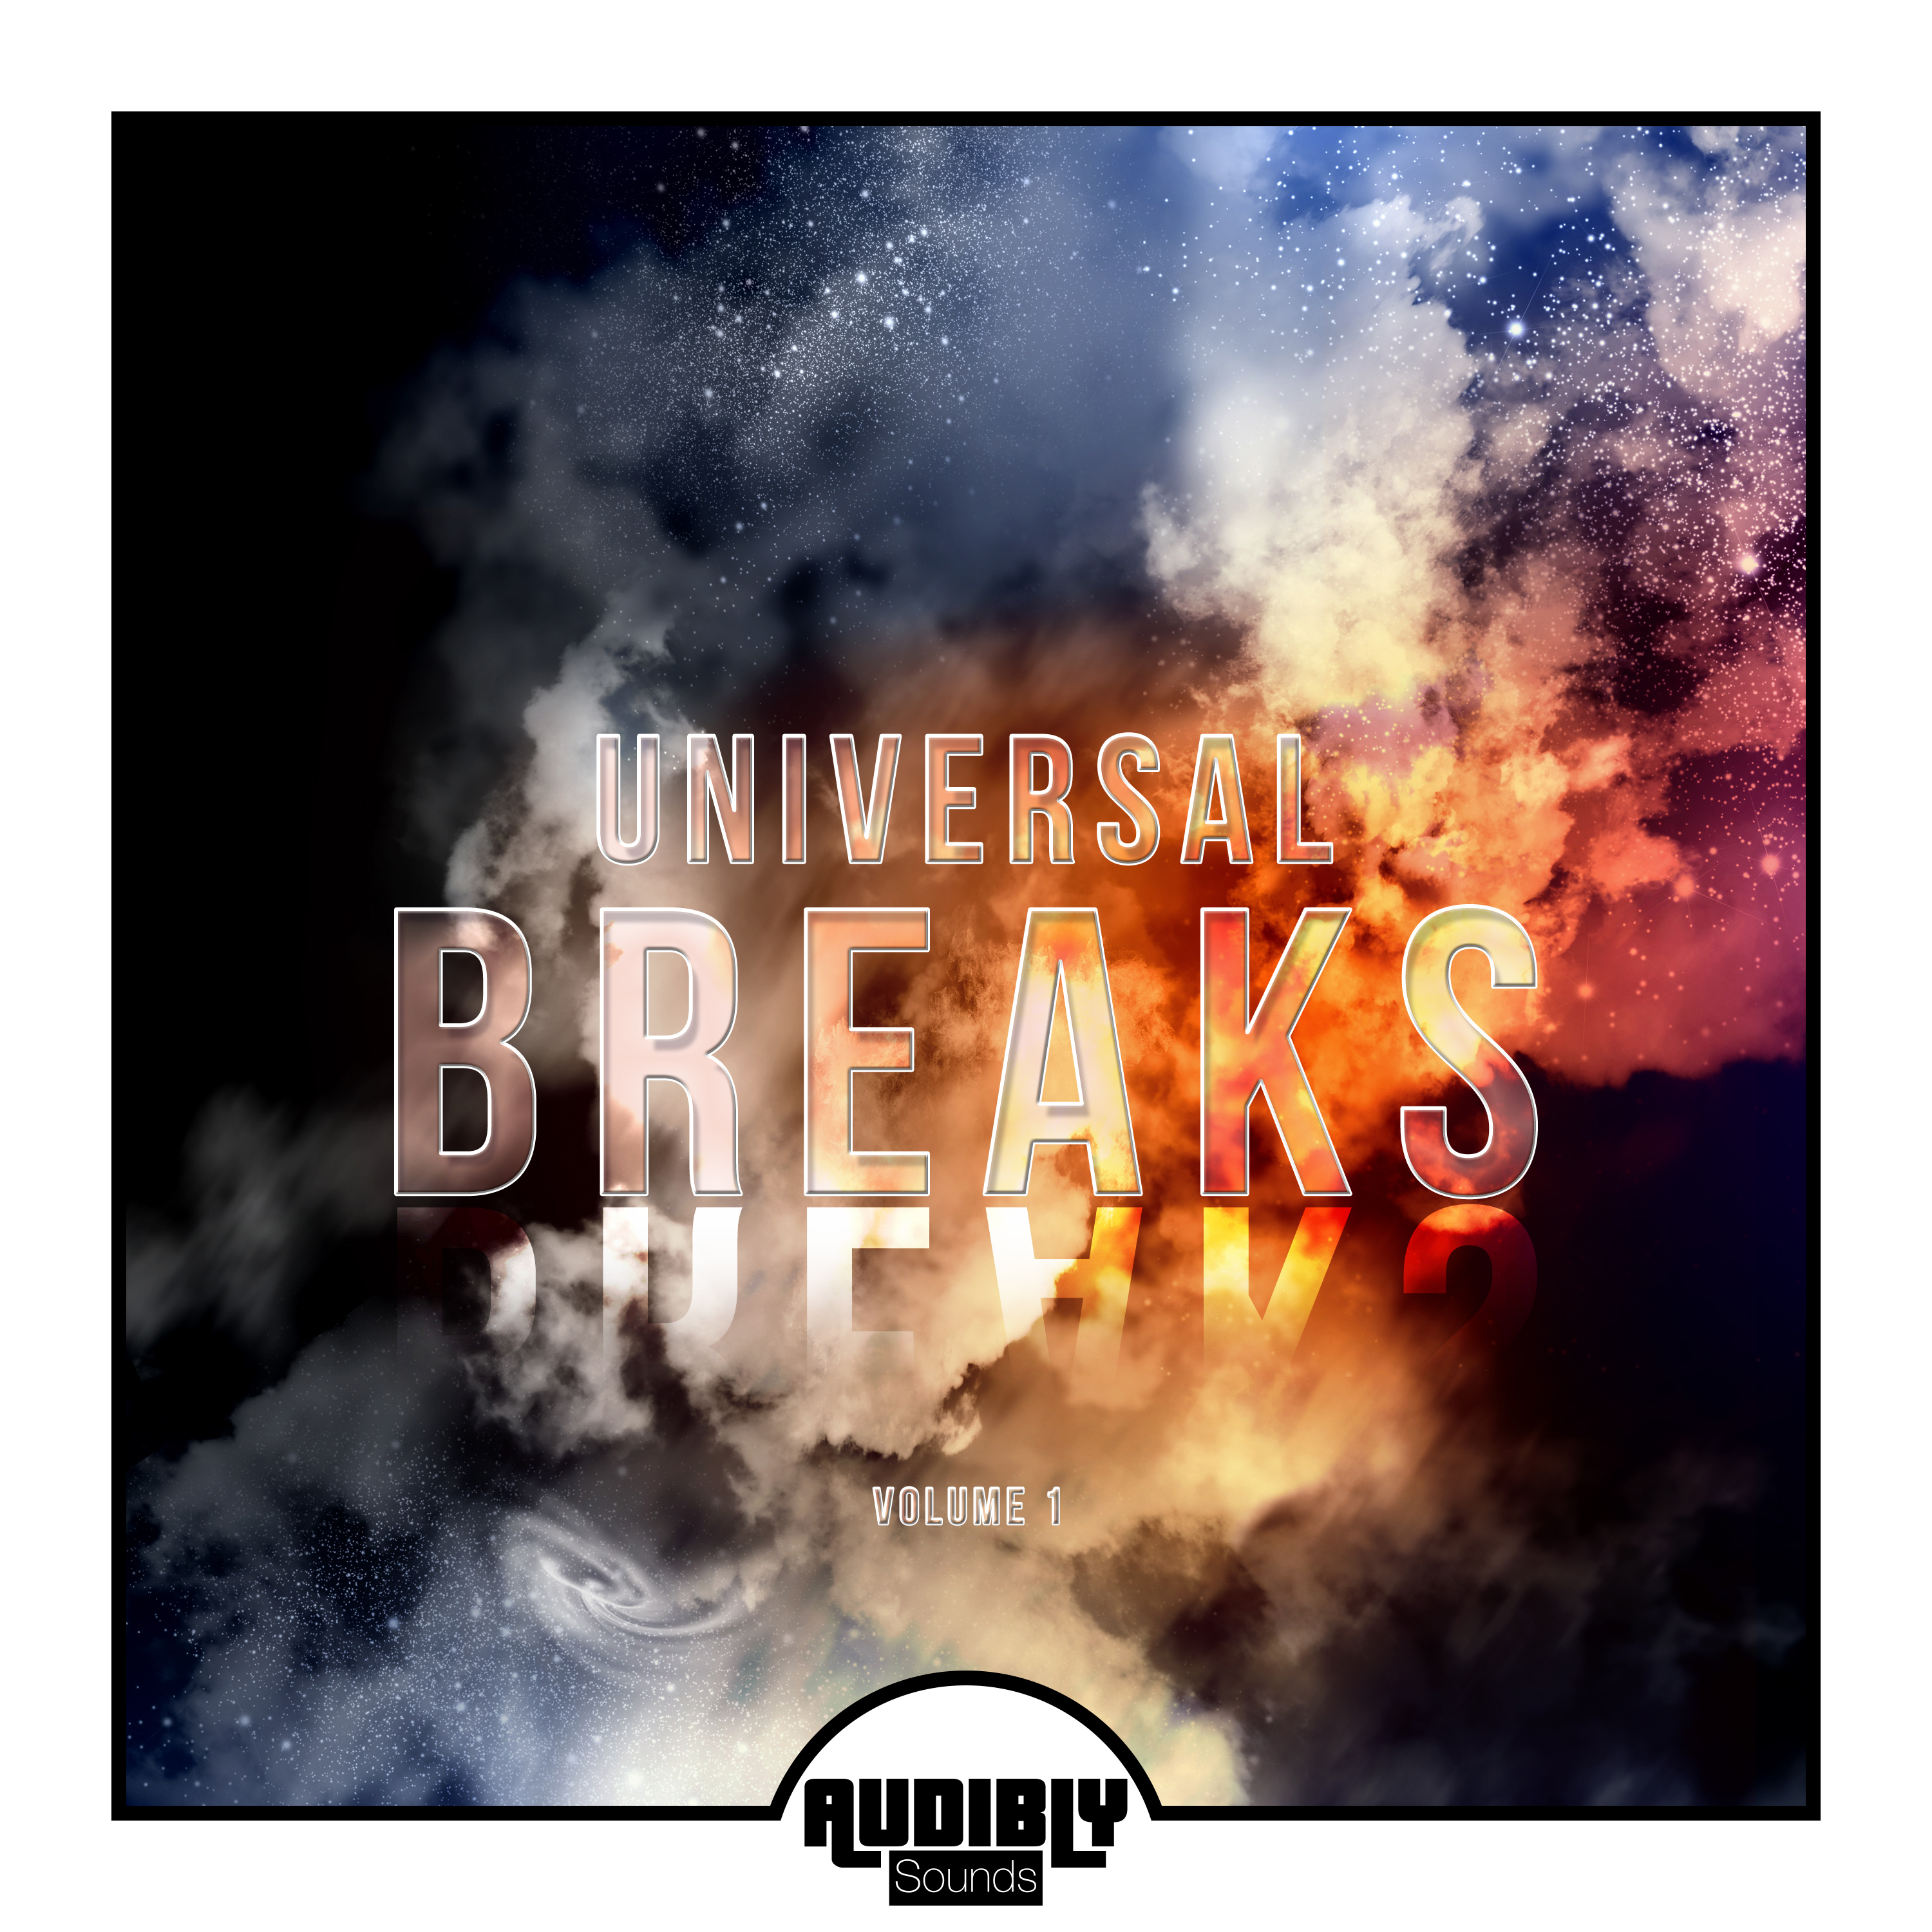 Universal Breaks, Vol. 1